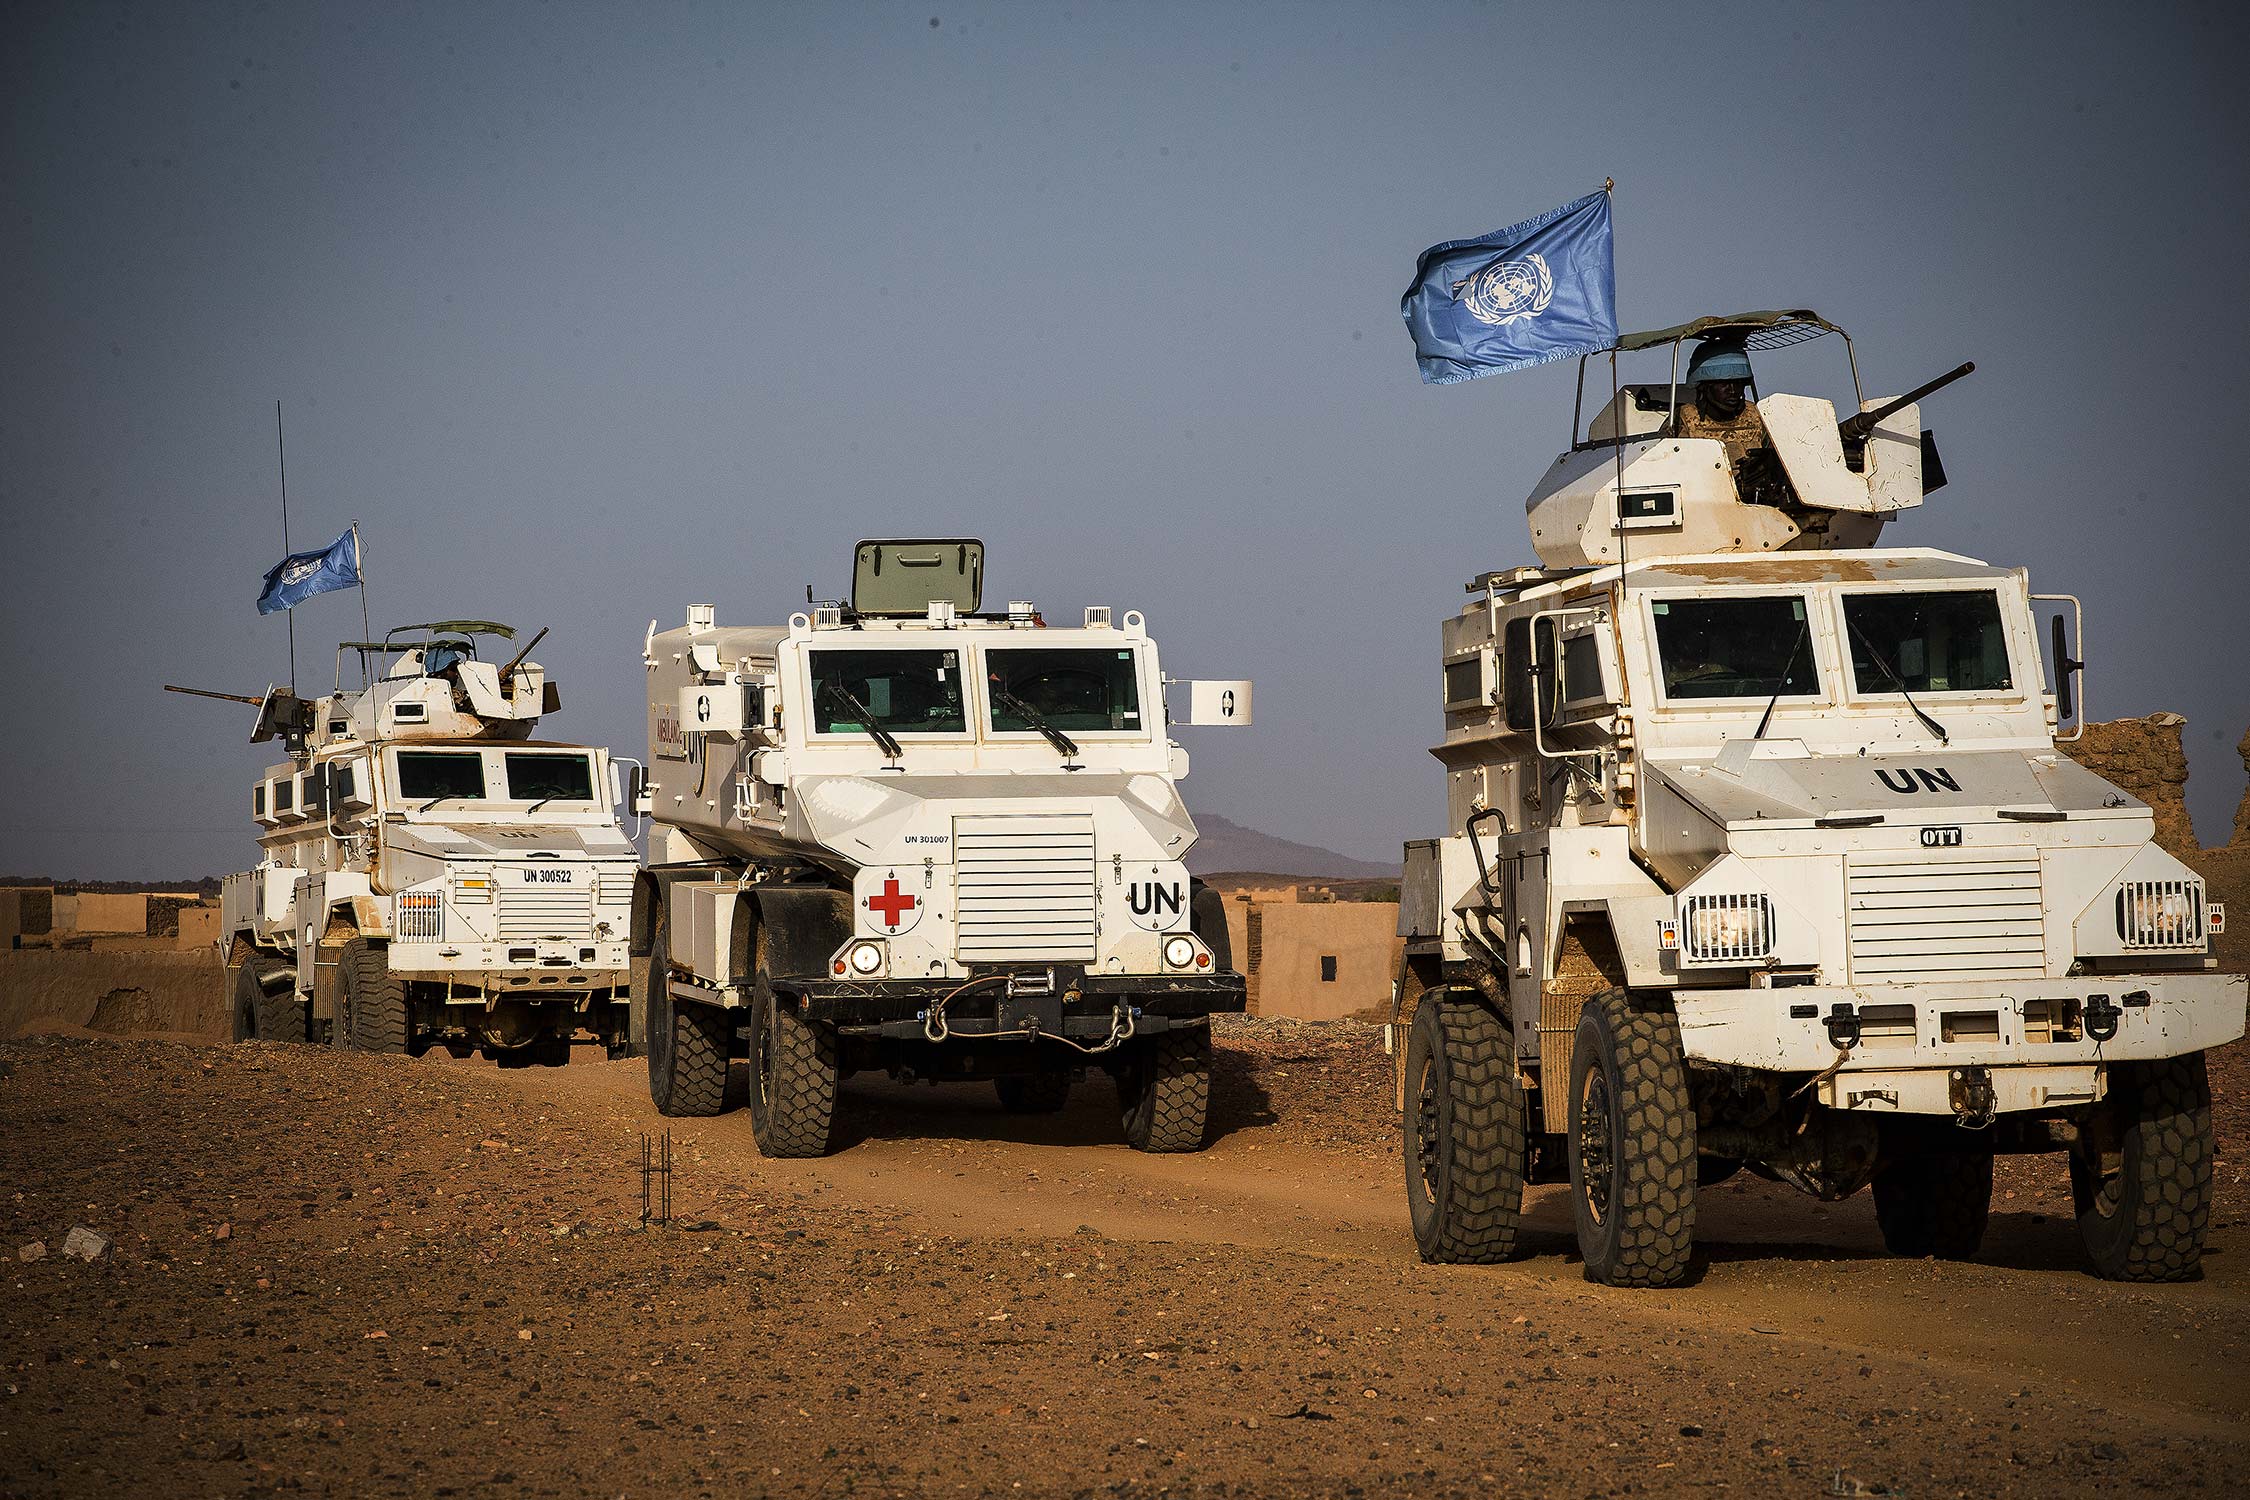 Ledakan Menargetkan Konvoi PBB di Mali, 7 Pasukan Penjaga Perdamaian Terluka